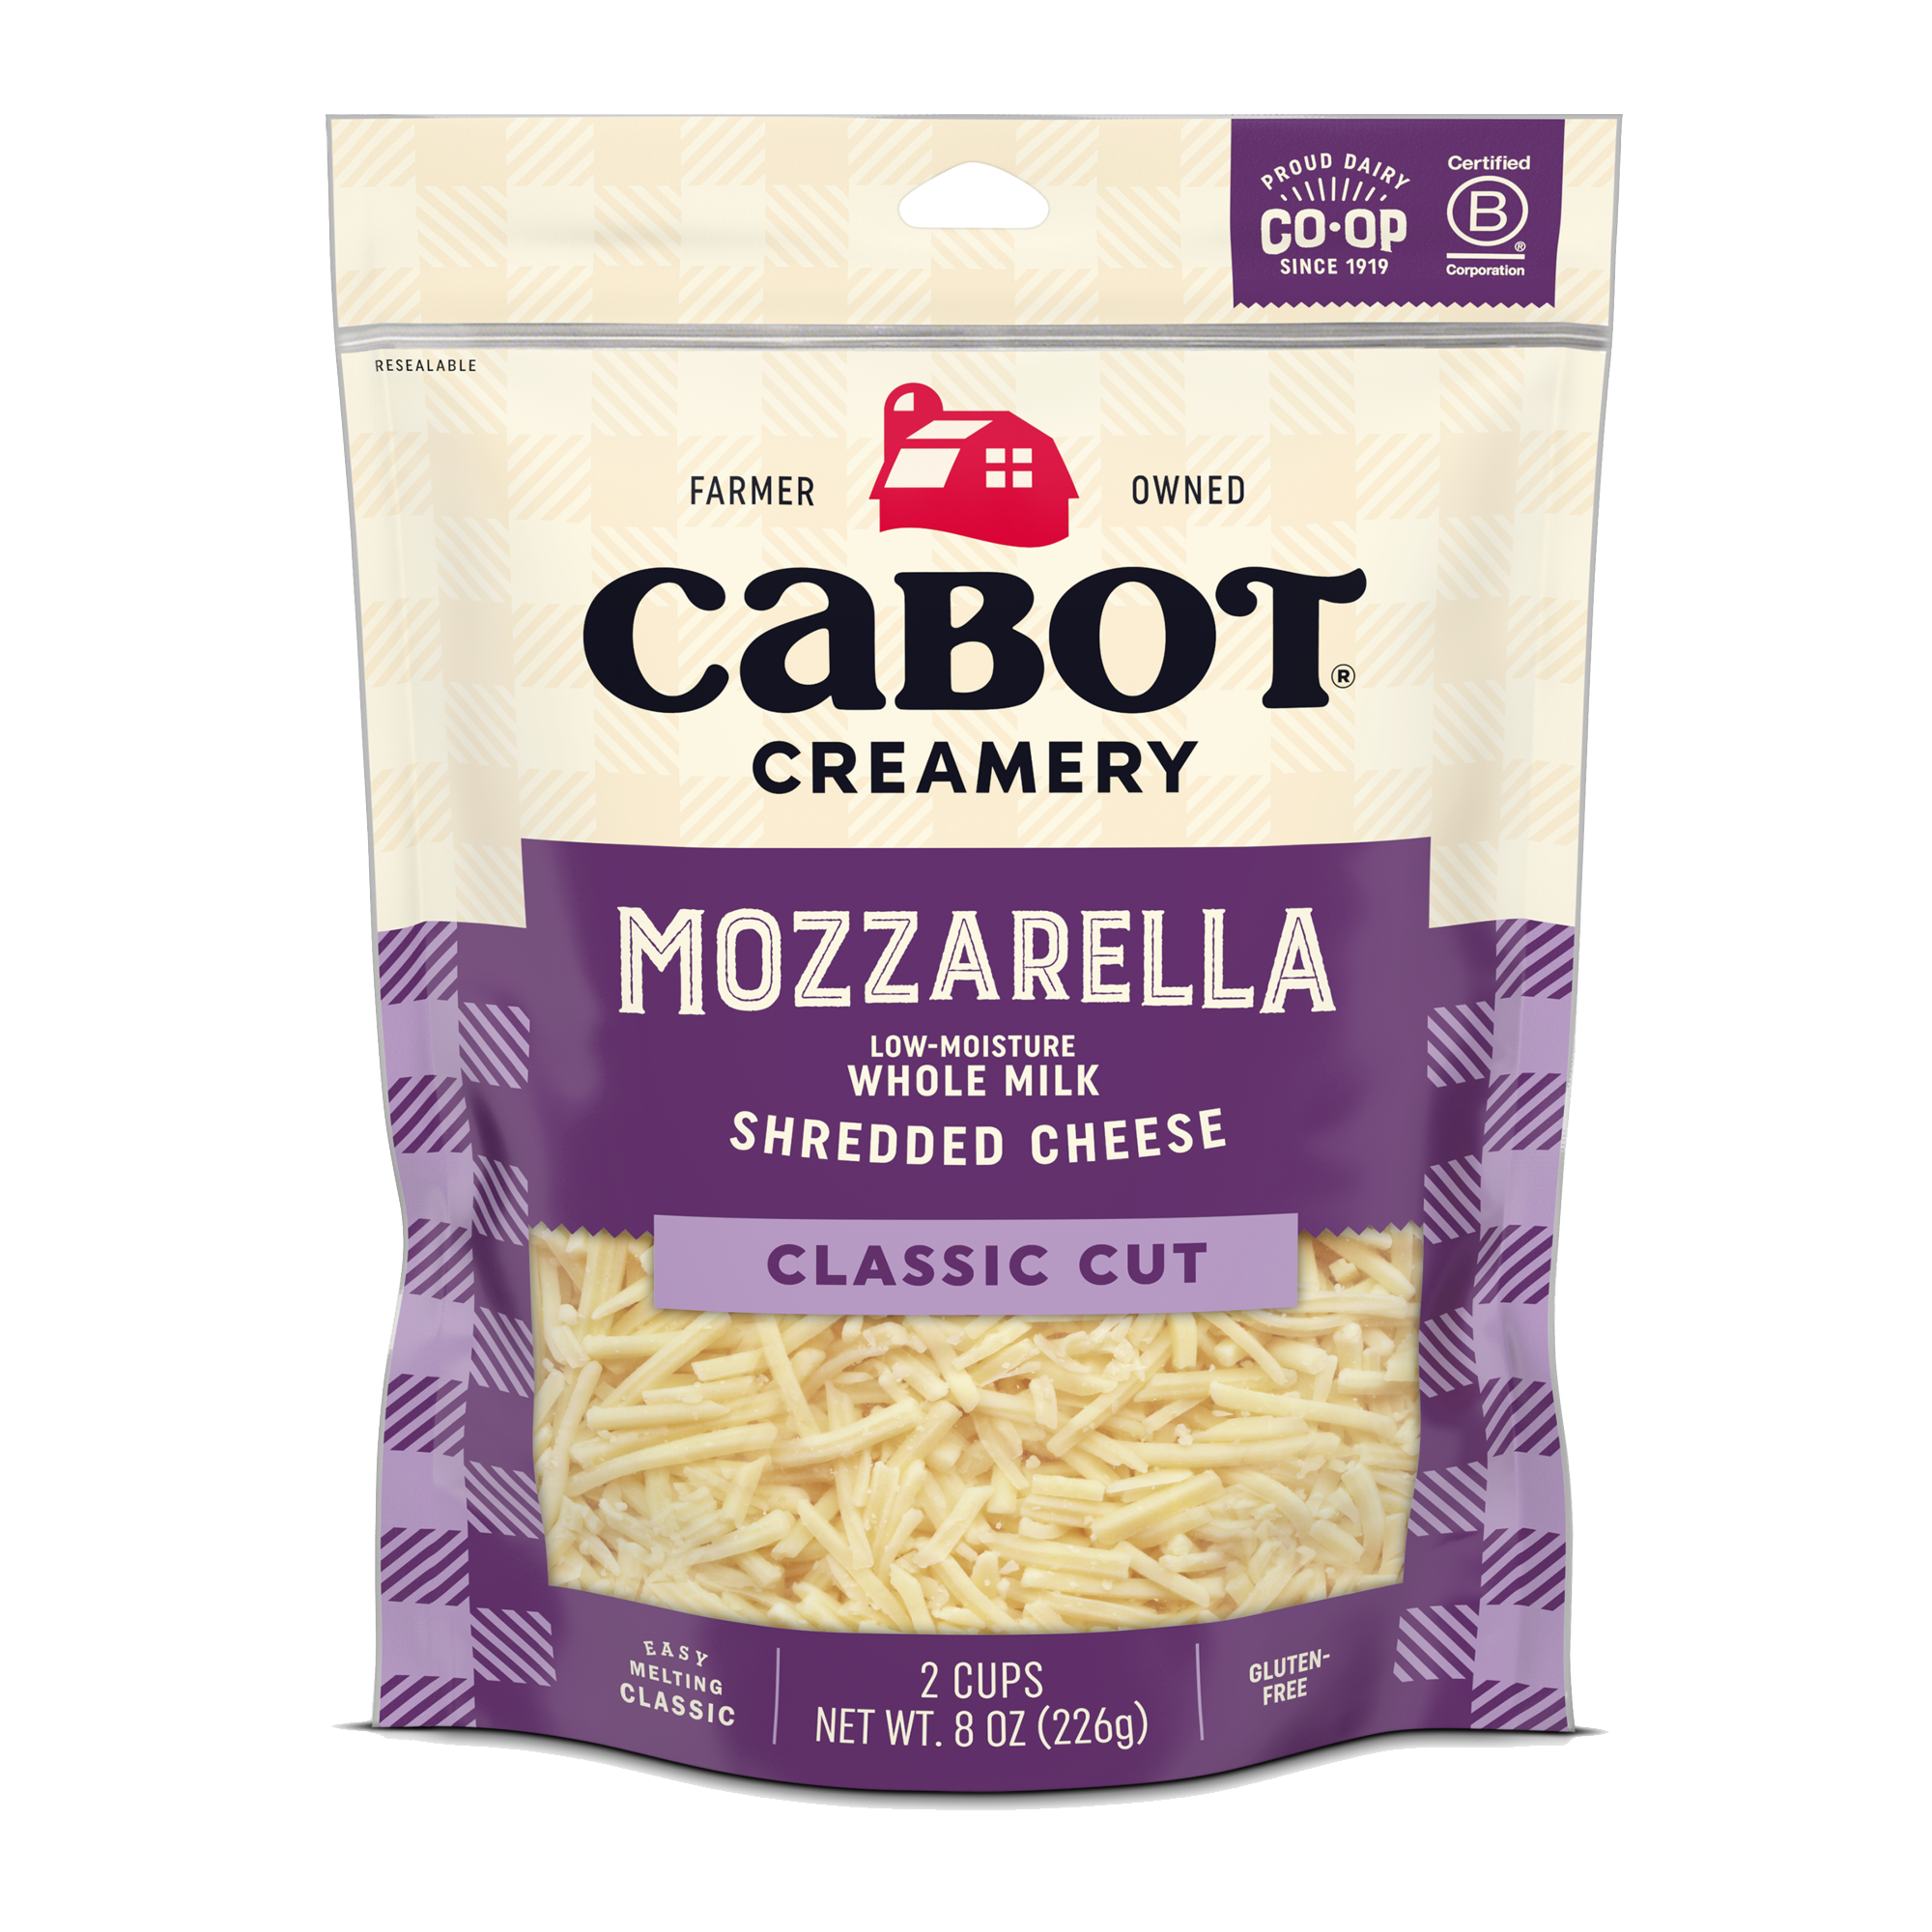 Cabot Mozzarella Whole Milk Cheese